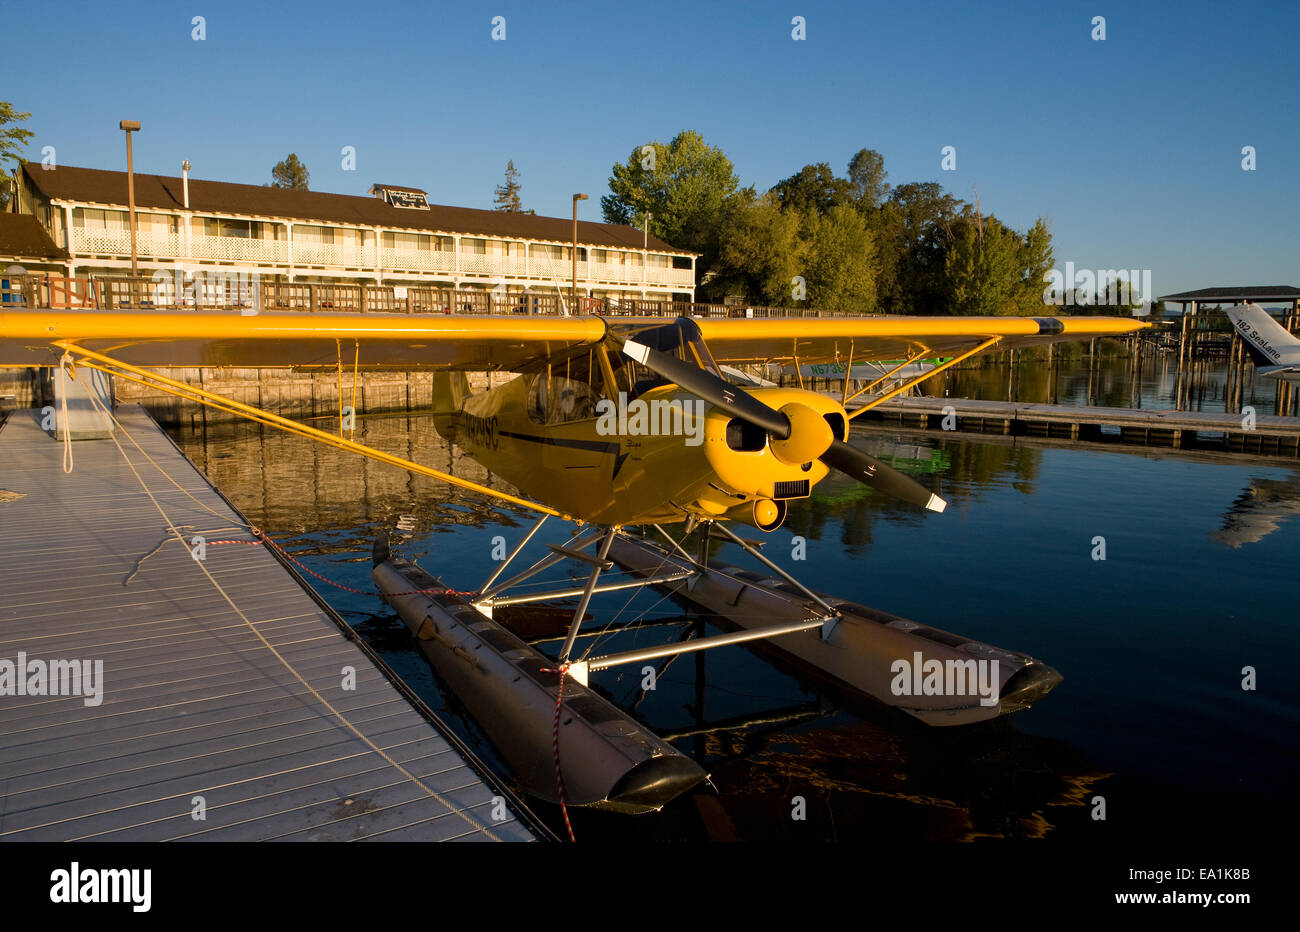 Piper Super Cub on Floats docked at the Sky Lark Shores Resort dock, Seaplane Splash-In, Lakeport, California, Lake County, Cali Stock Photo